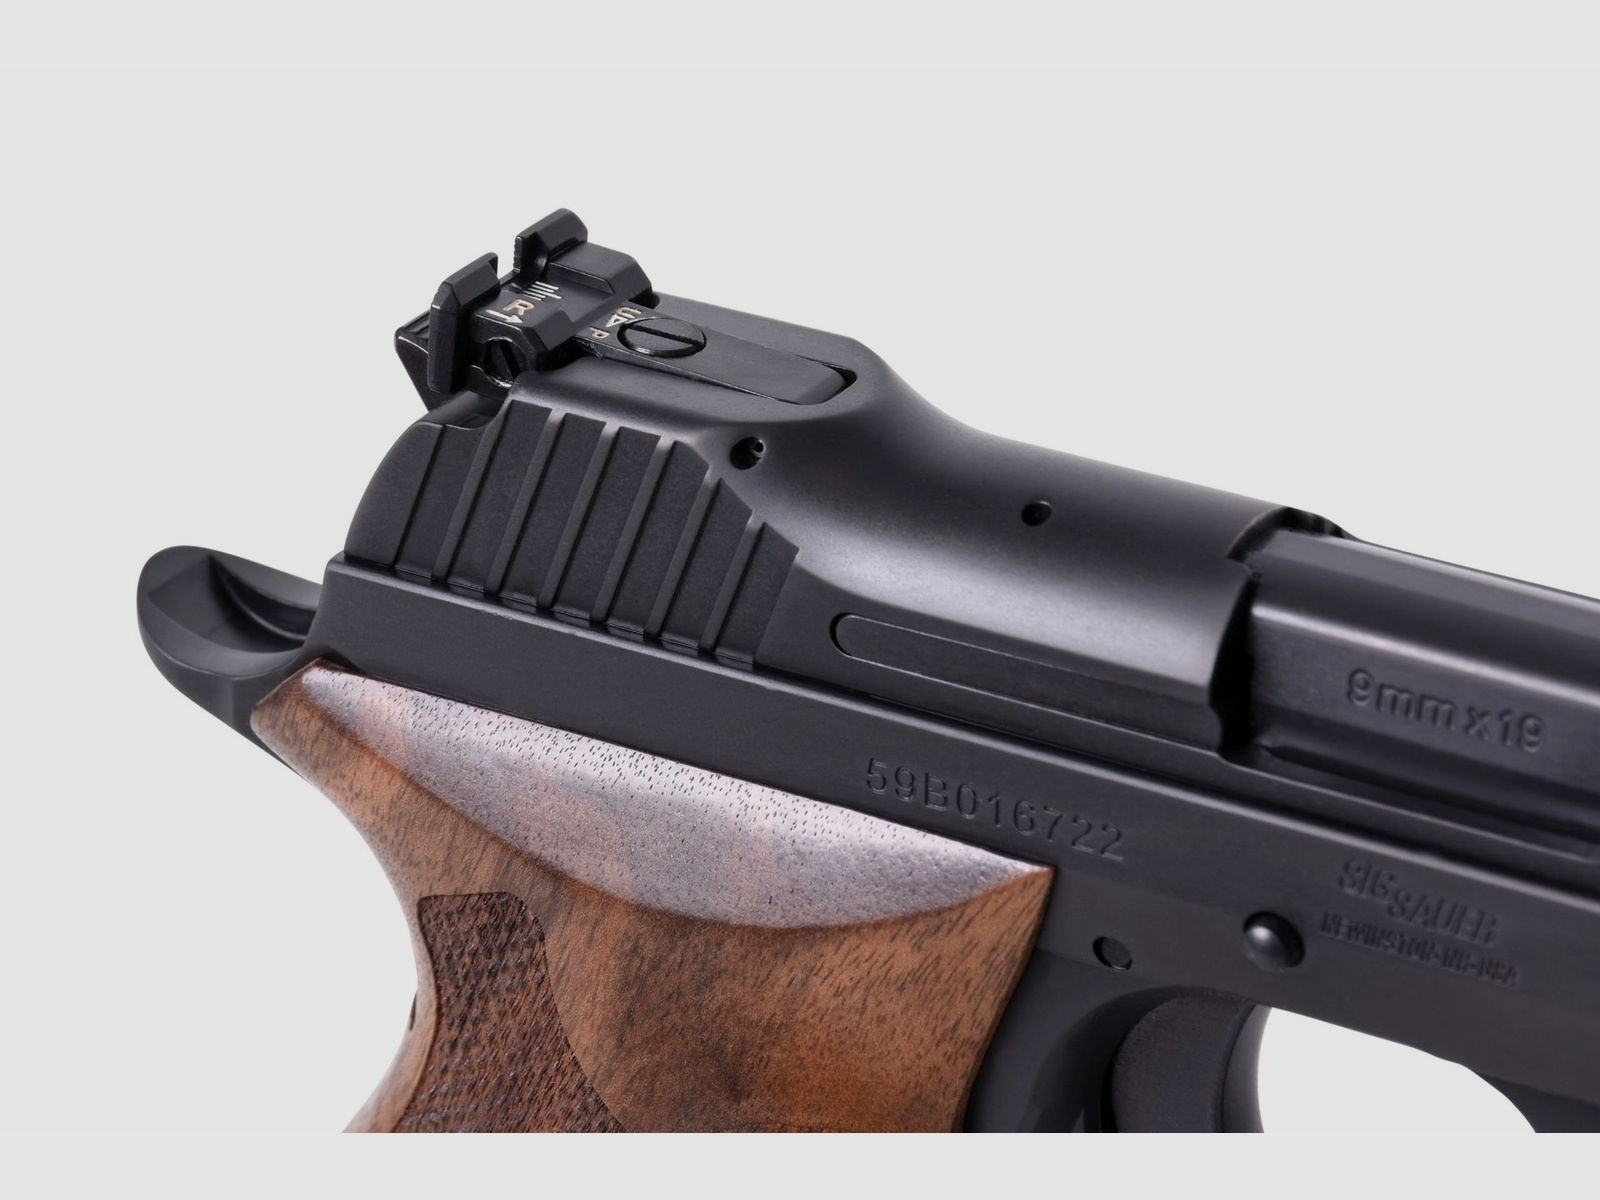 Sig Sauer P210 Target 9mm Luger - Selbstladepistole Matchpistole